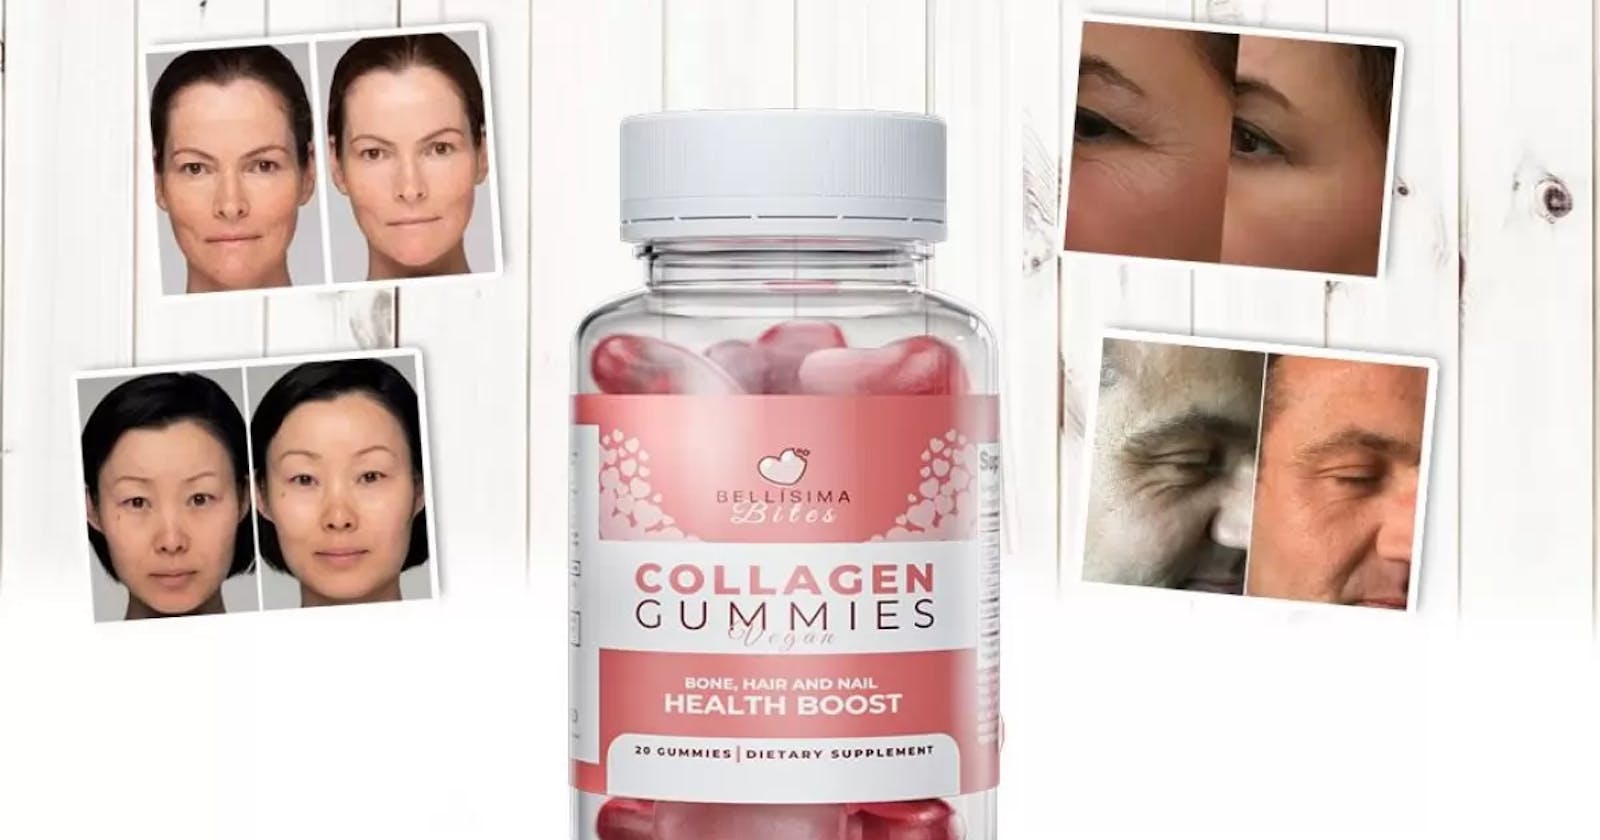 Bellissima Skin Anti Aging Gummies Result | Bellísima Skin Collagen Gummies USA Official Site